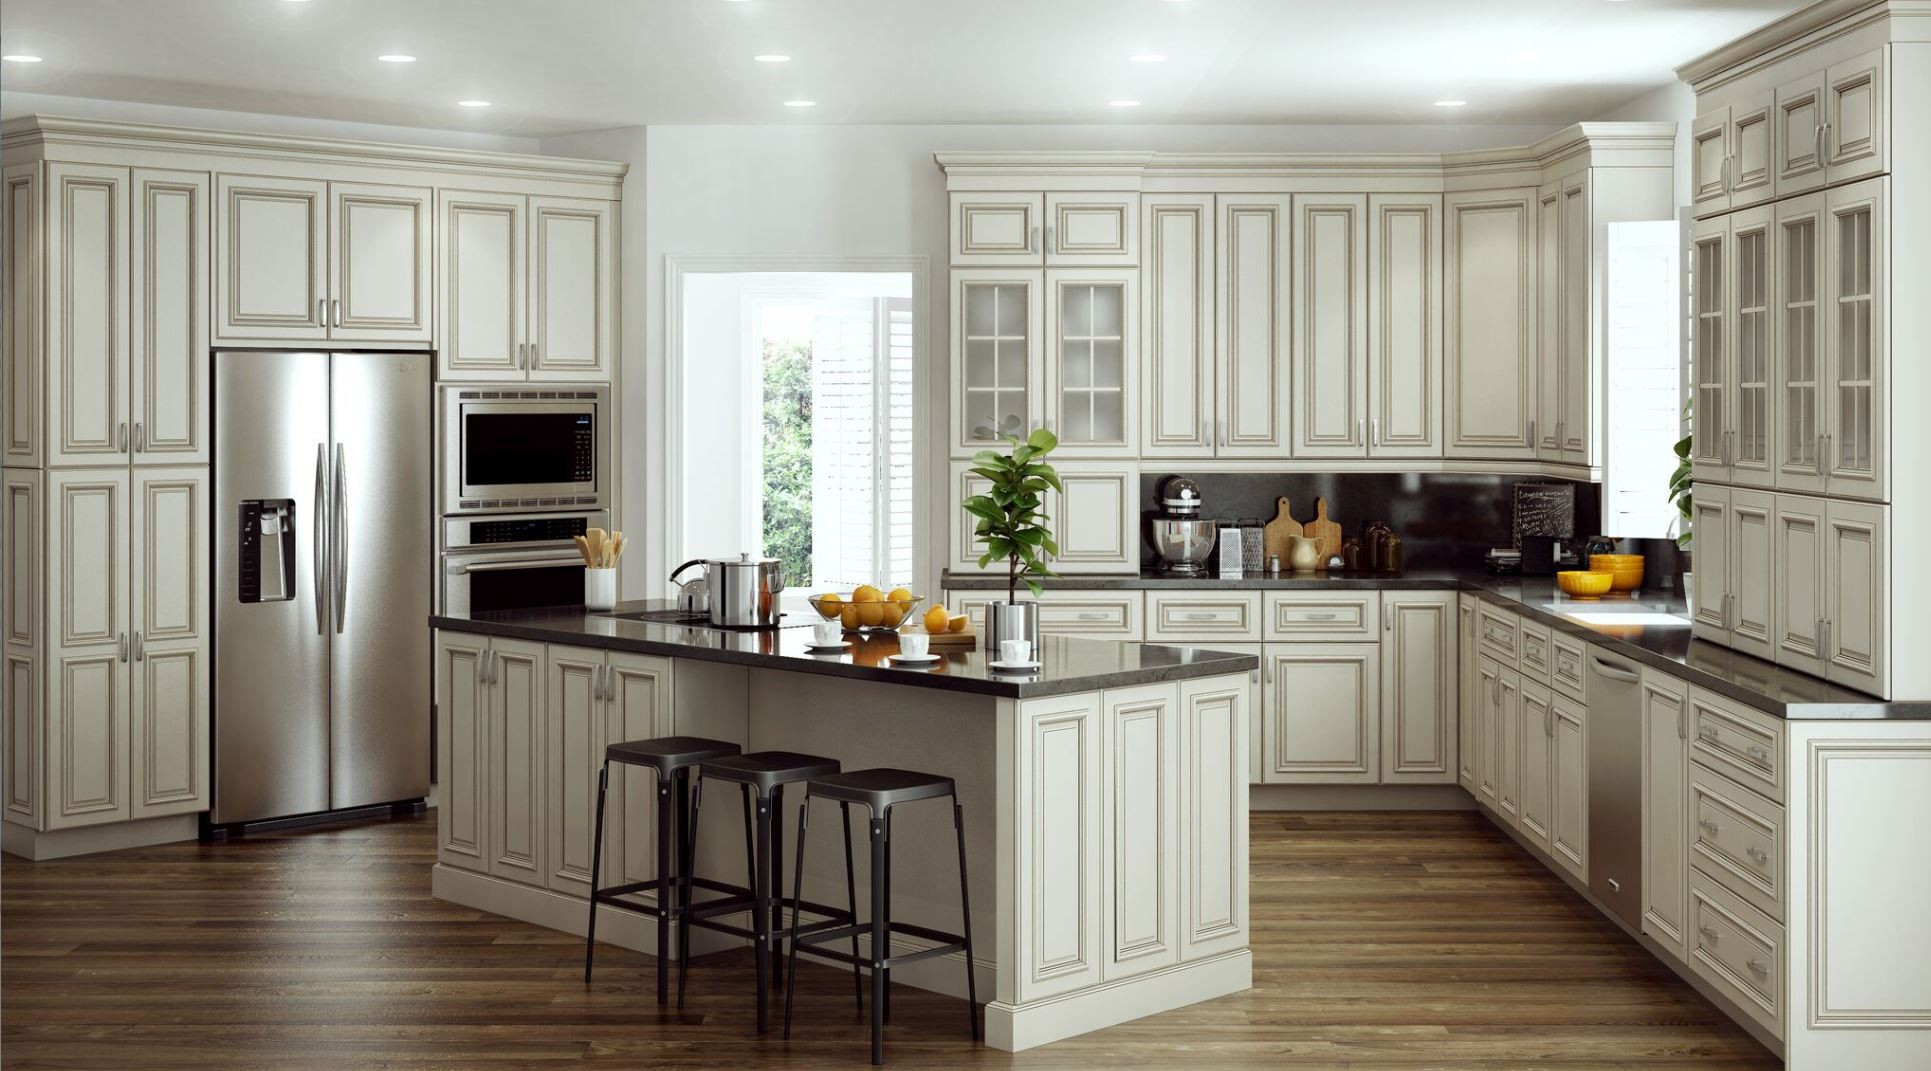 Home Depot Kitchen Cabinet
 Holden Base Cabinets in Bronze Glaze – Kitchen – The Home